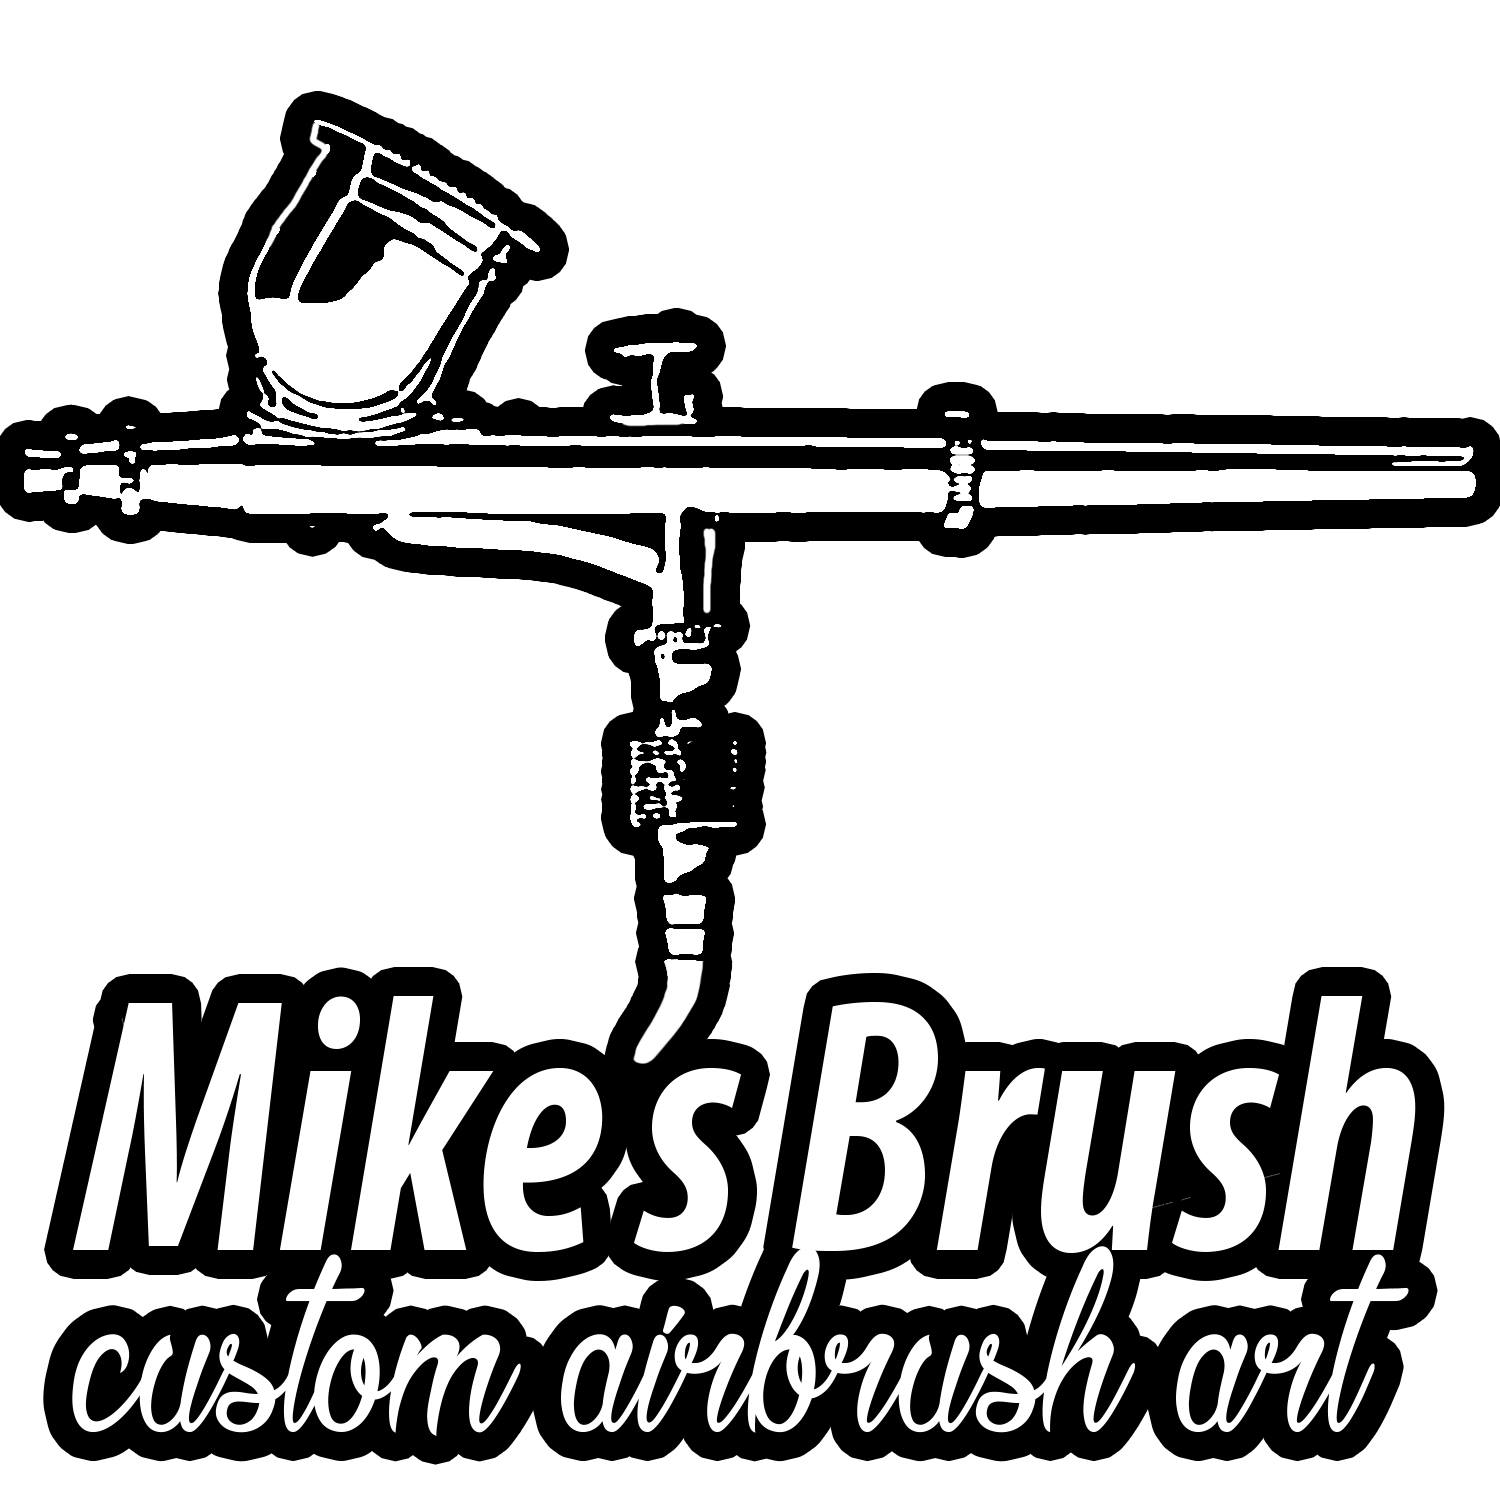 Company logo of Mike's Brush